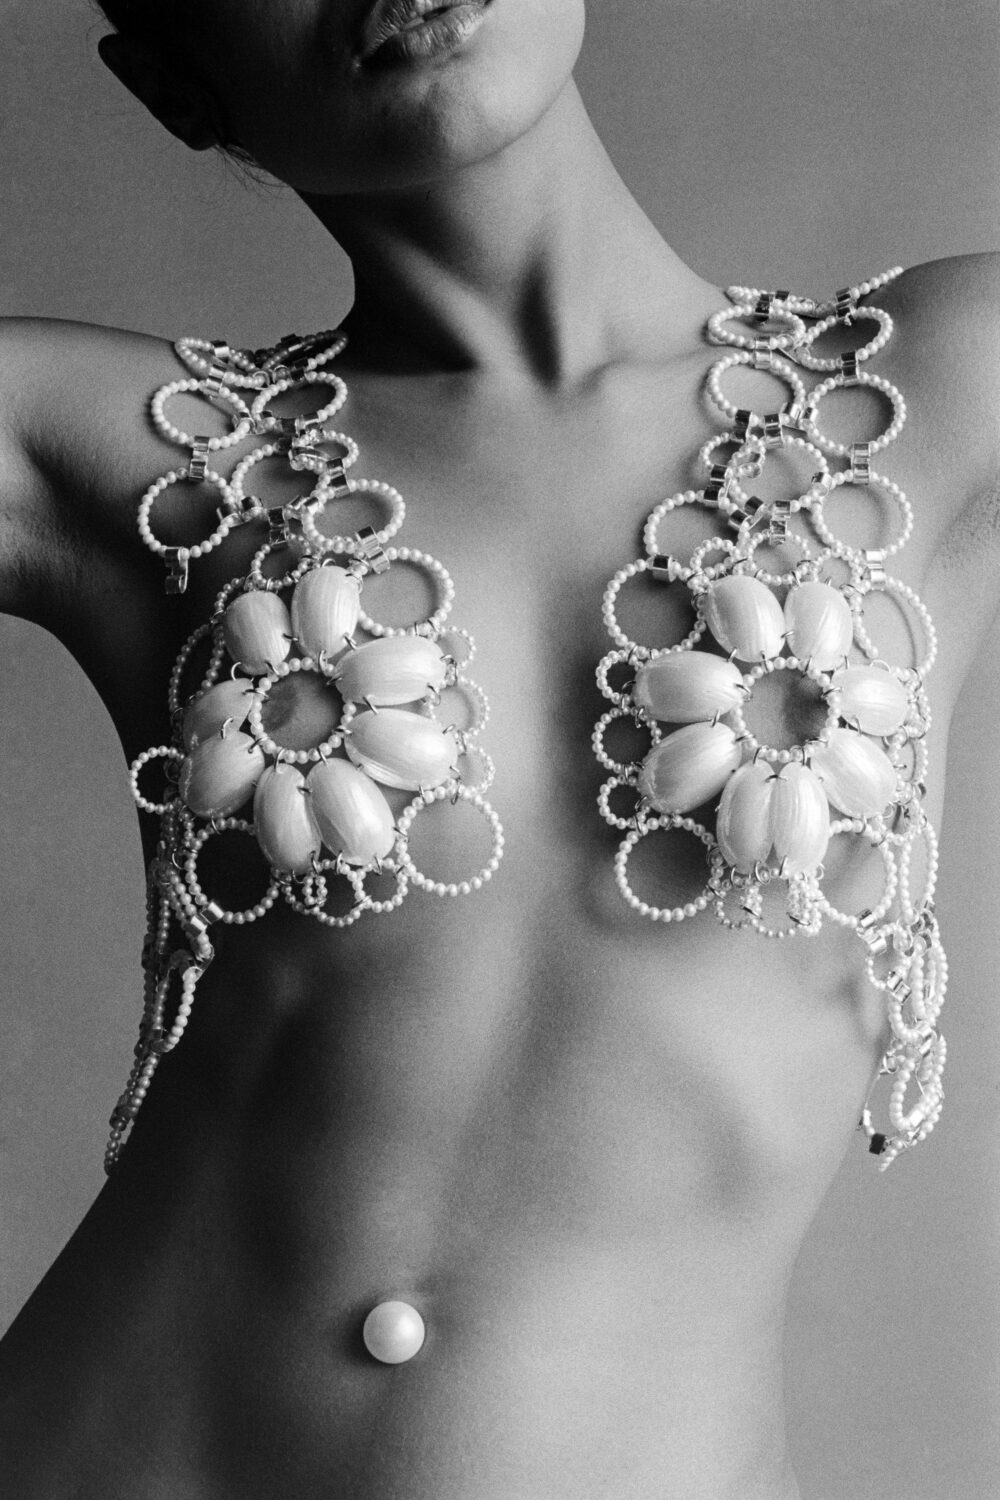 Hans Feurer: Pearls